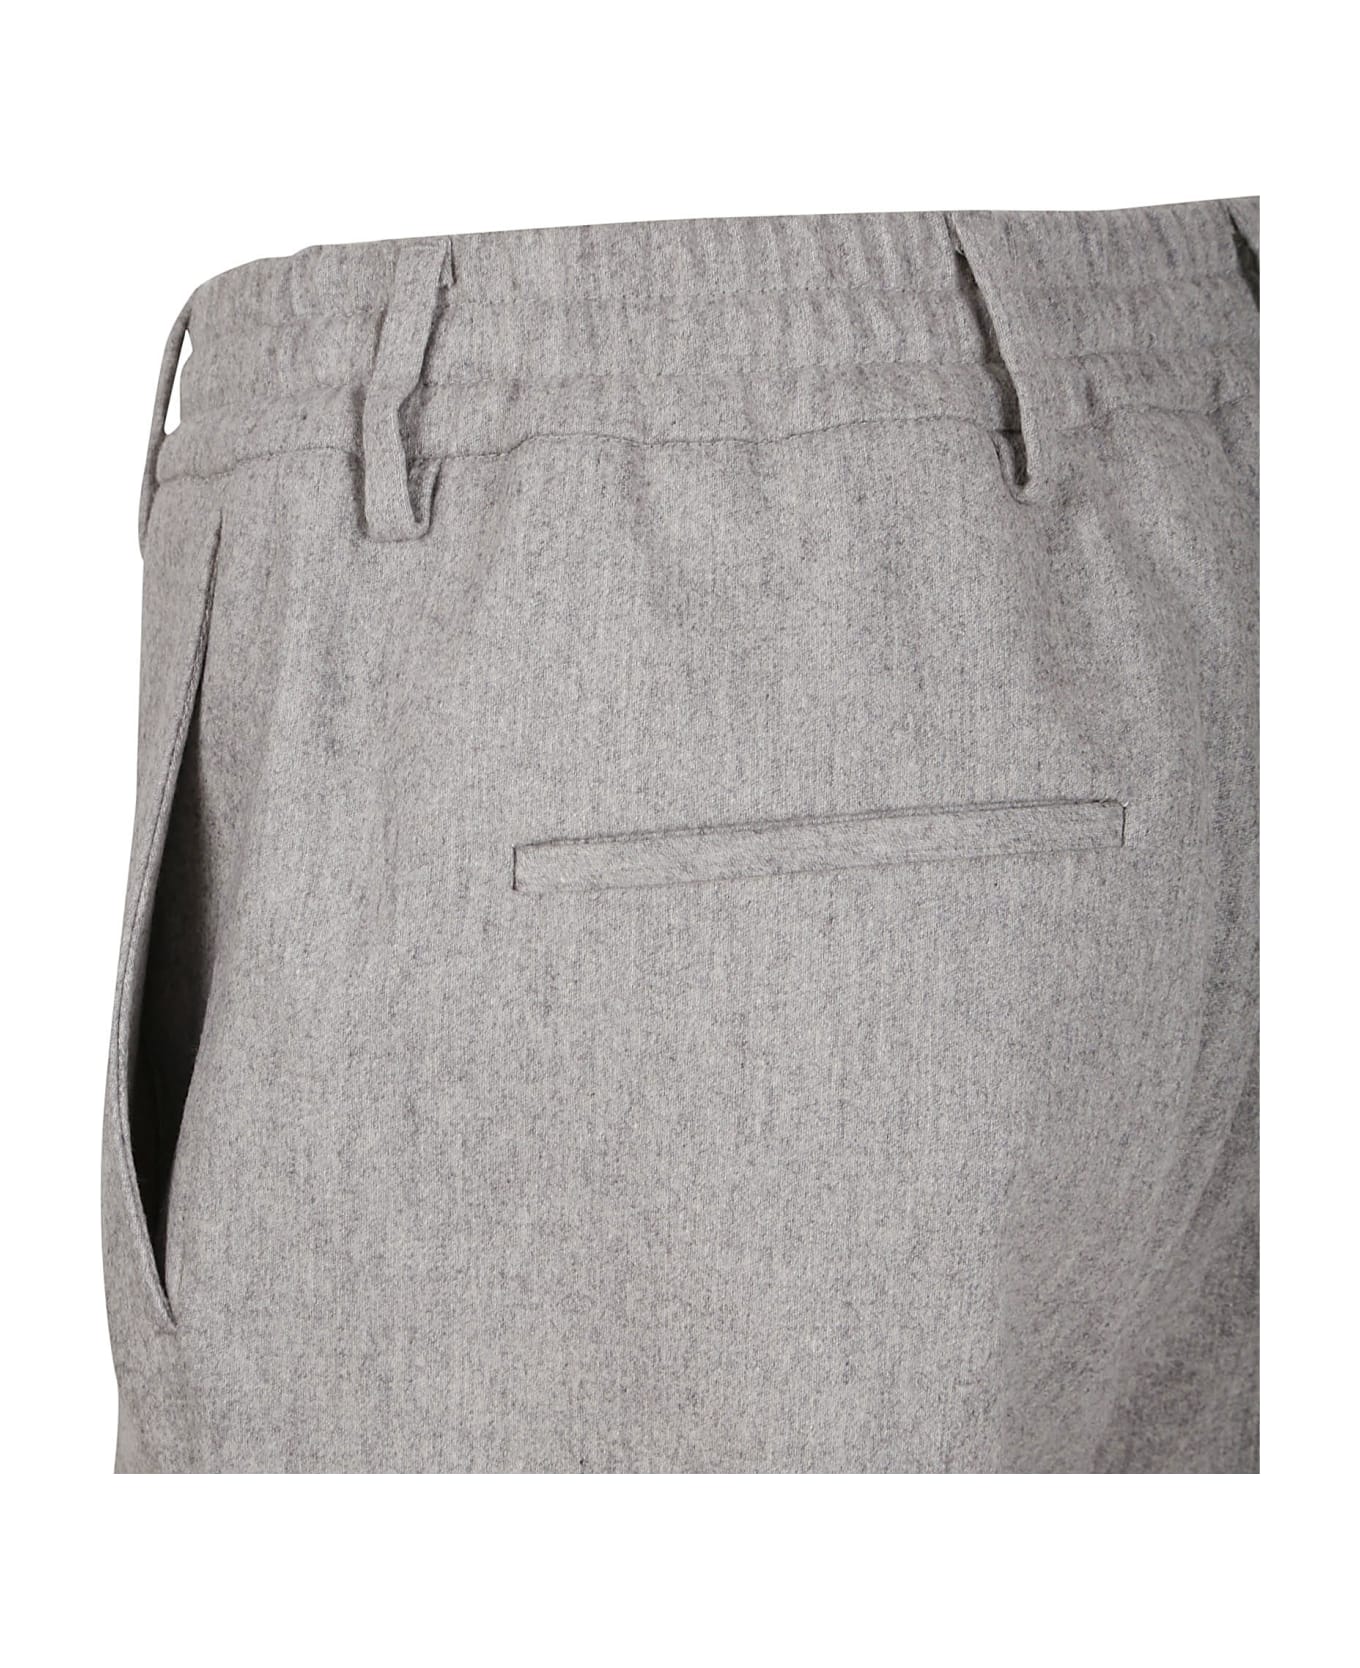 Eleventy Trousers Grey - Grey ボトムス